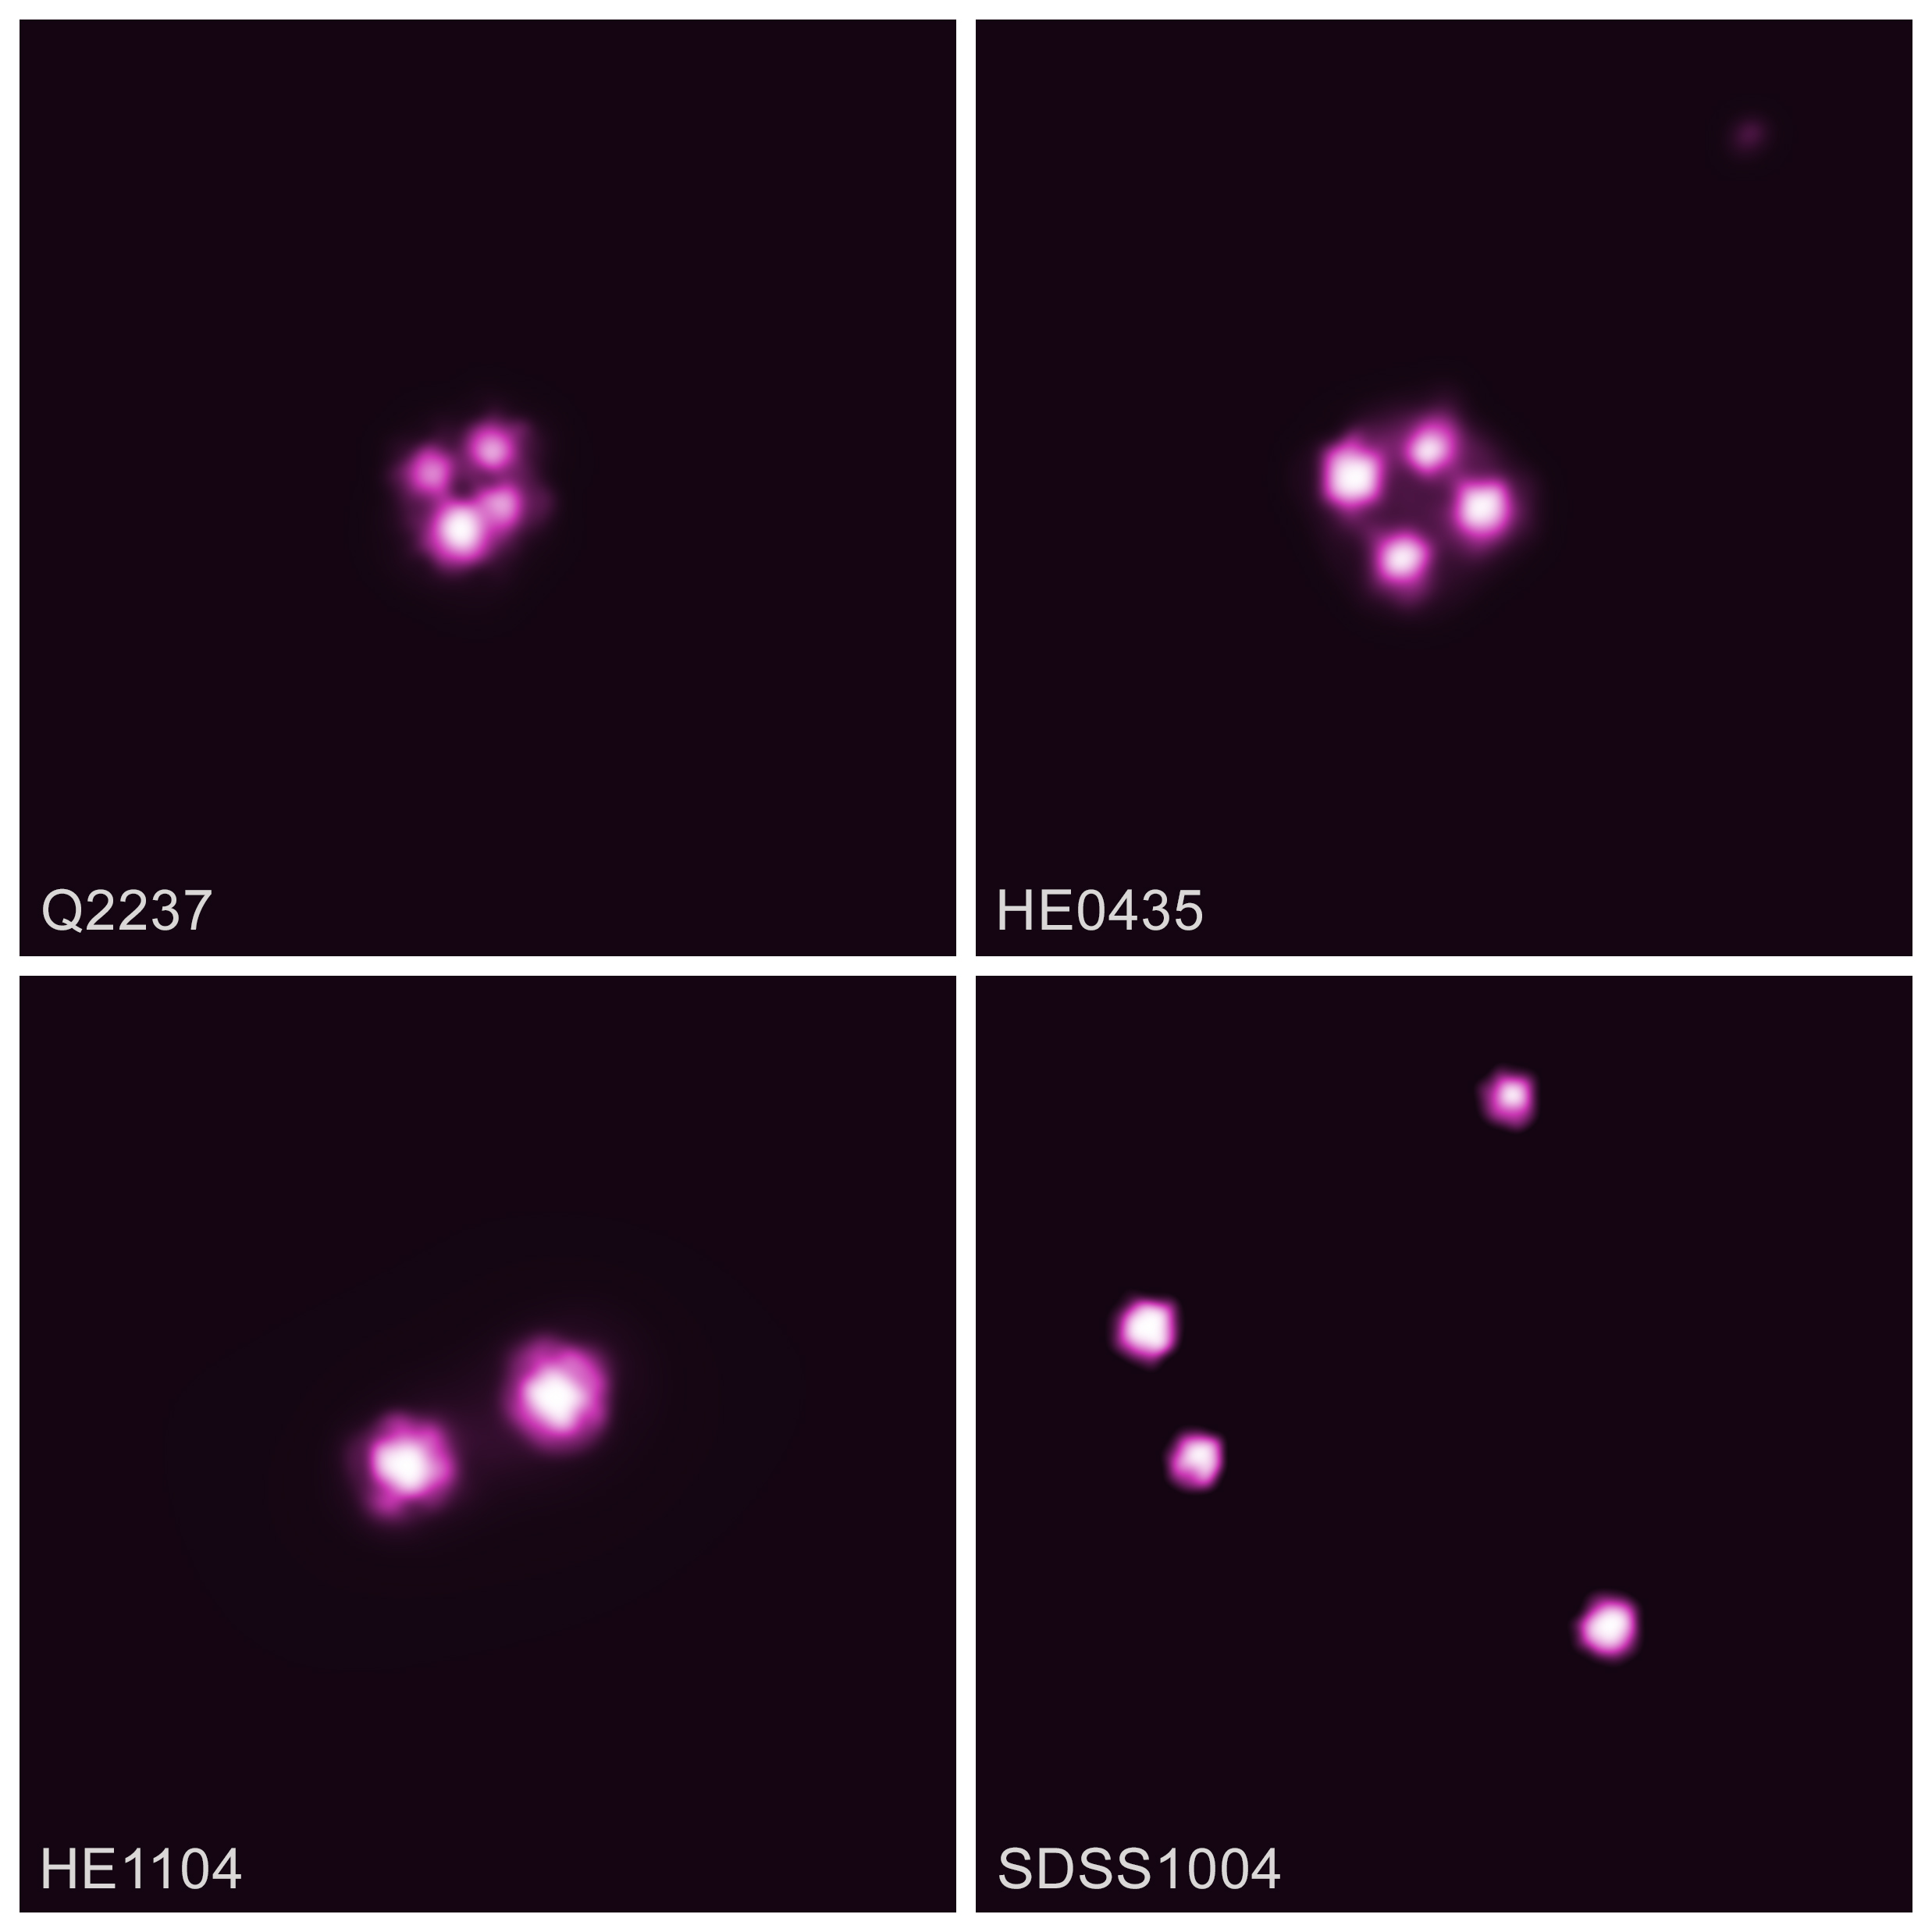 Quasar lenses with Chandra